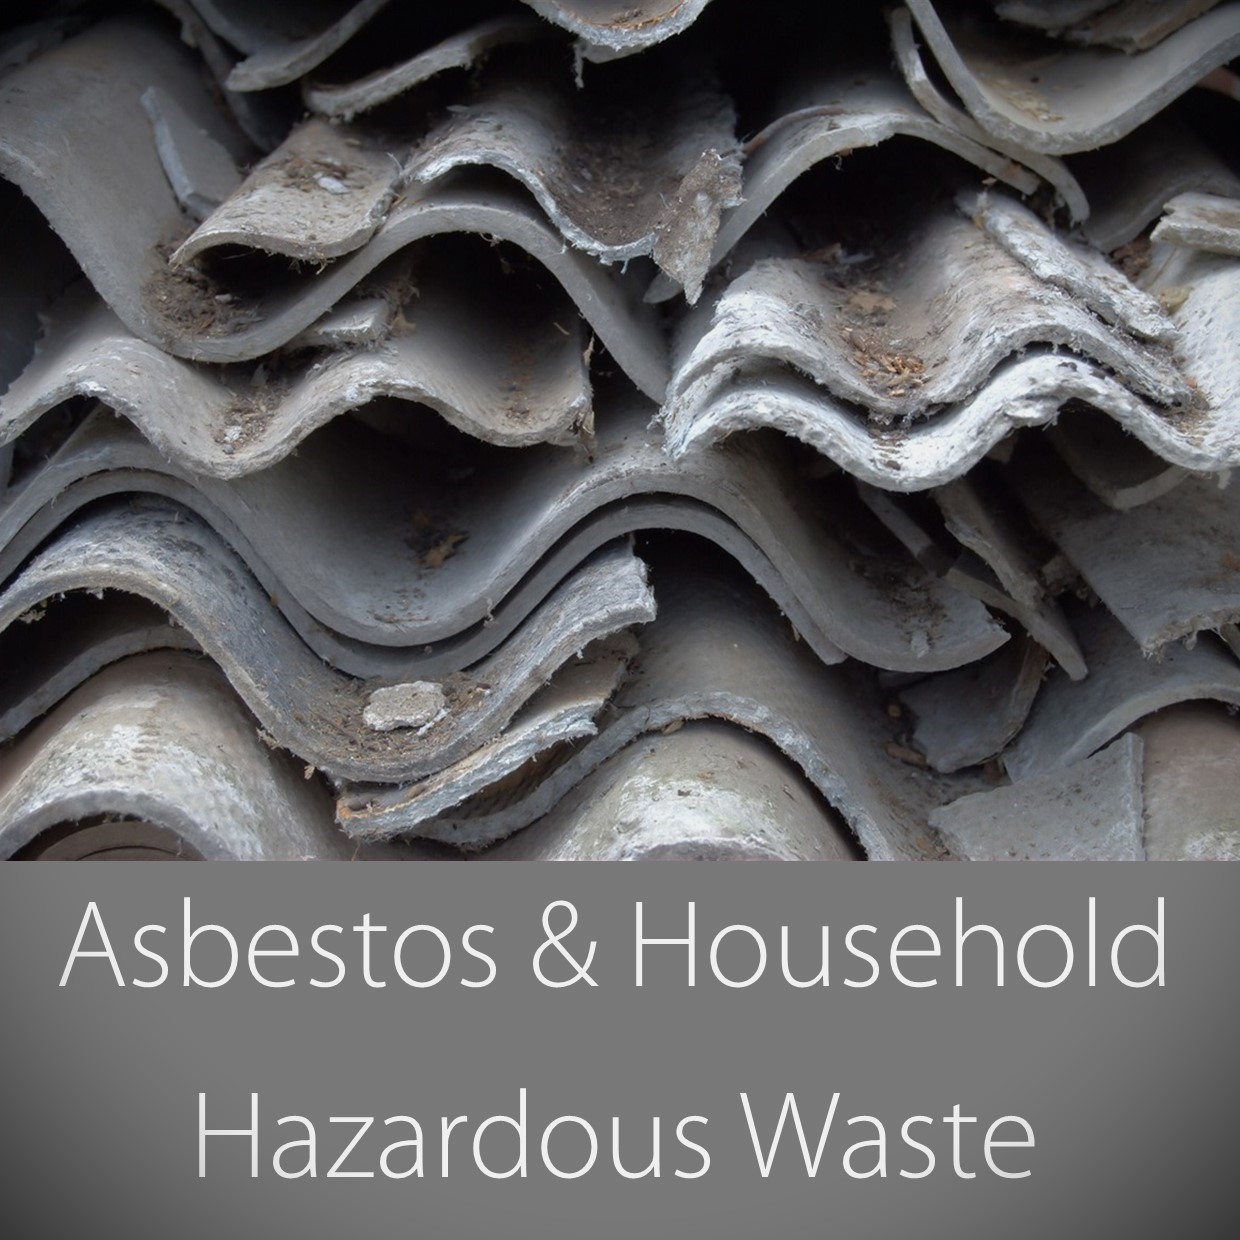 Asbestos and HHW